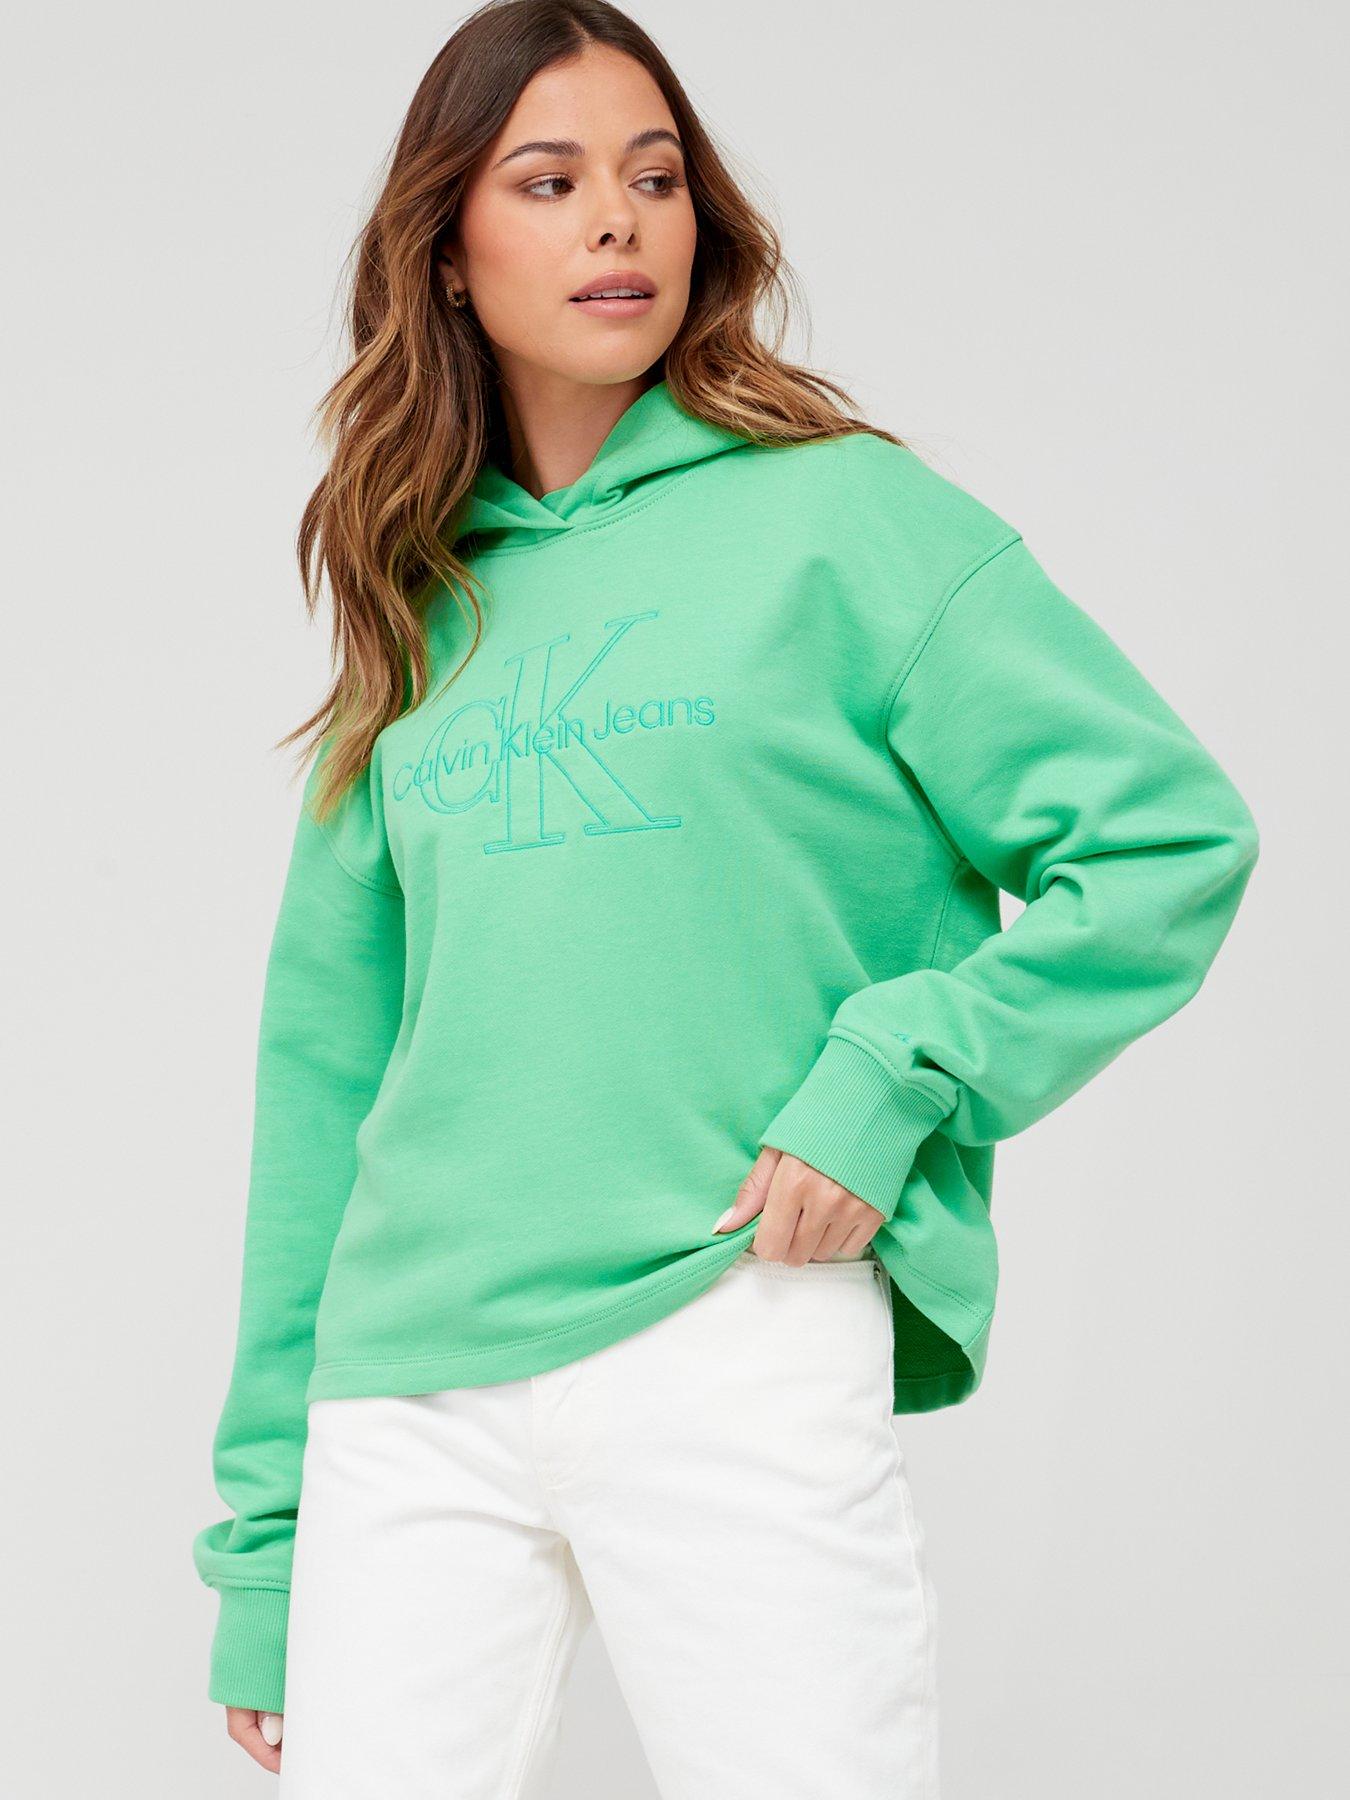 Calvin klein | Hoodies & sweatshirts | Women 